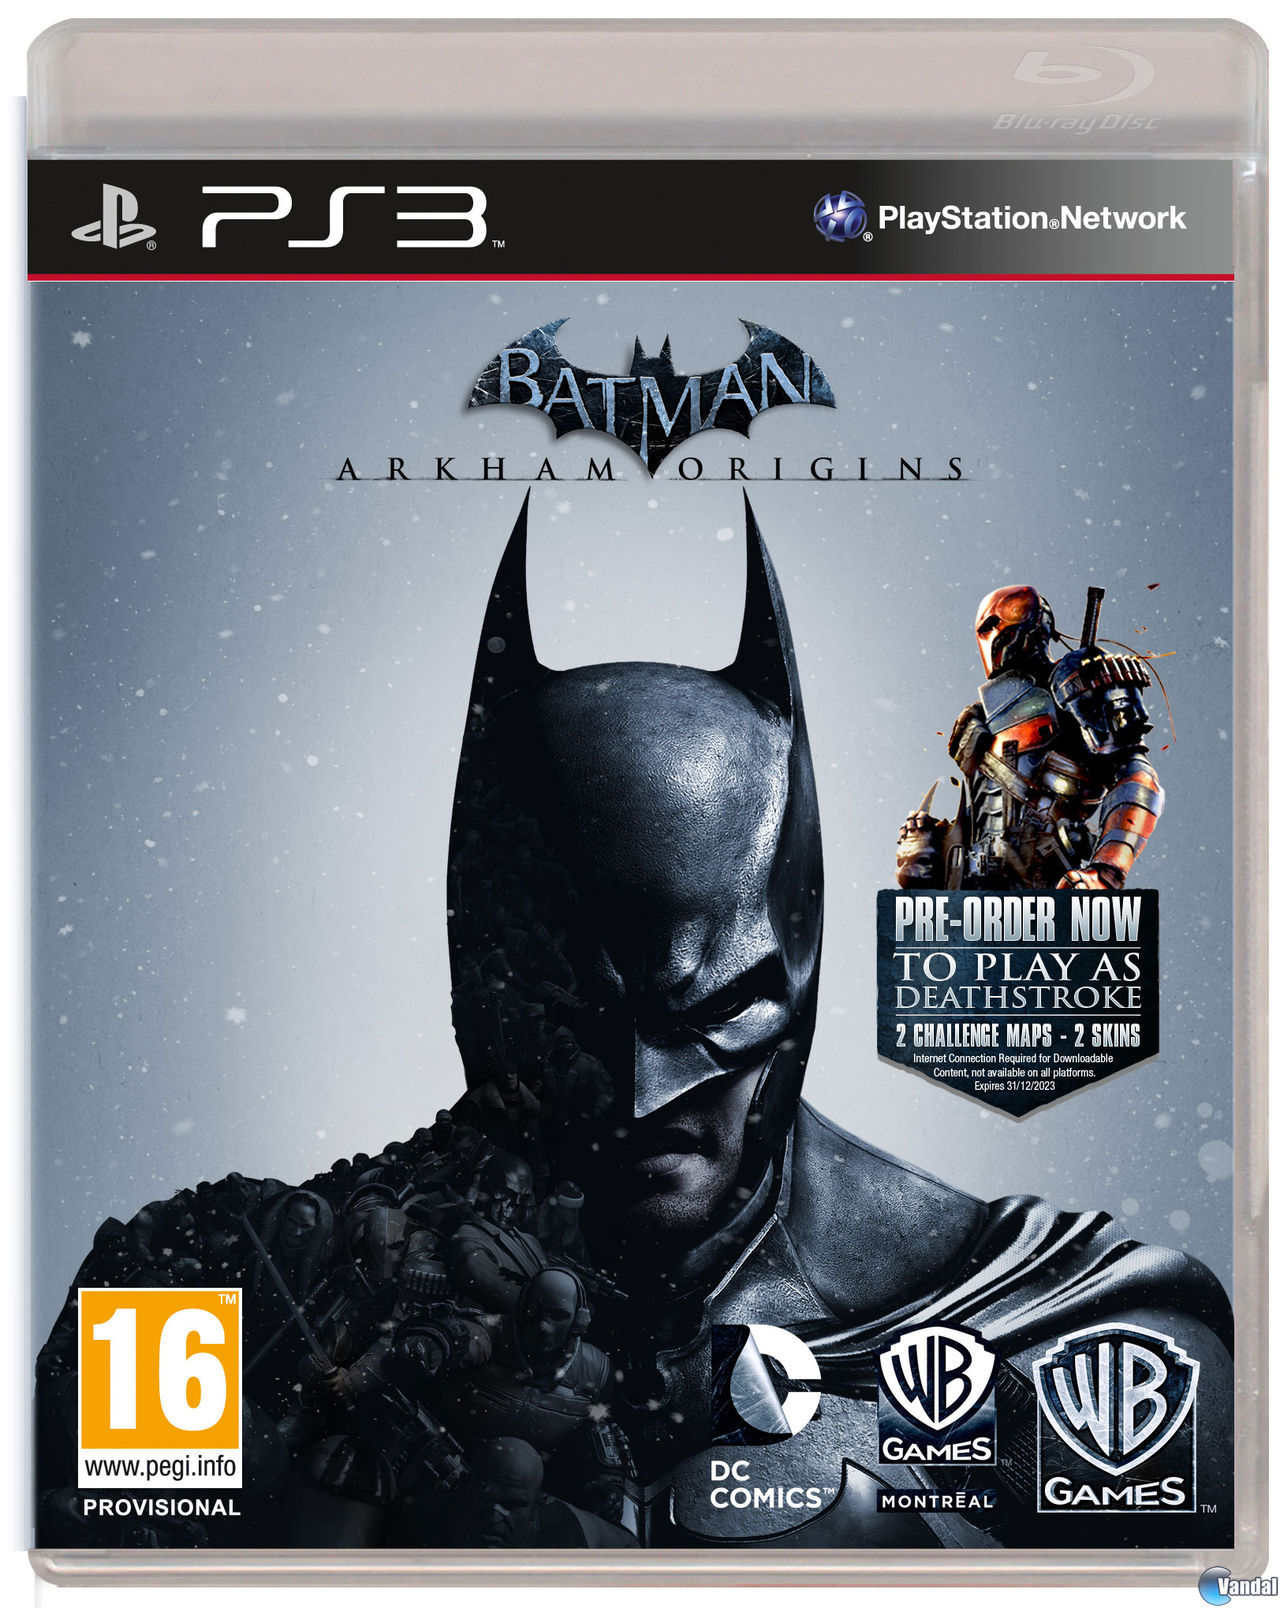 princesa rigidez famoso Batman: Arkham Origins - Videojuego (PS3, Xbox 360, PC y Wii U) - Vandal